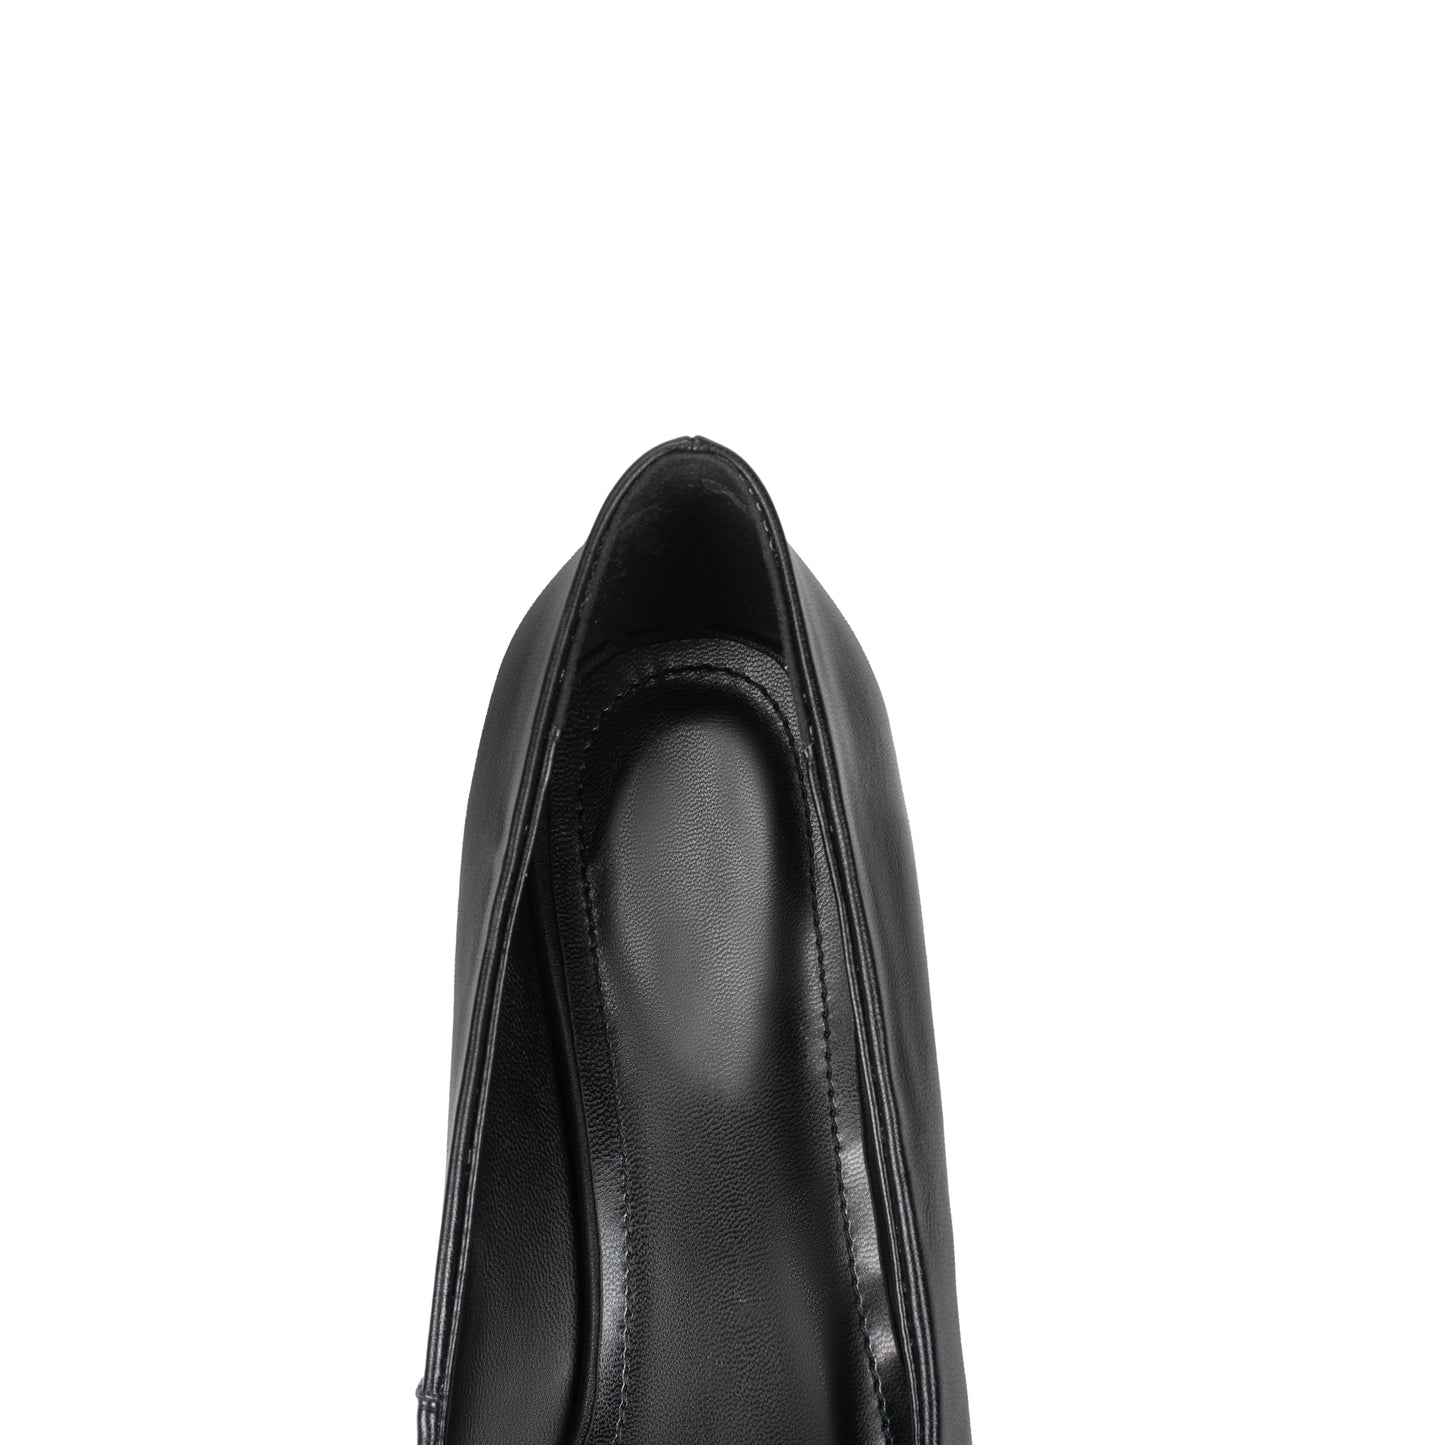 TinaCus Genuine Leather Women's Handmade Pointed Toe Comfortable Wedge Heel Slip On Pump Shoes